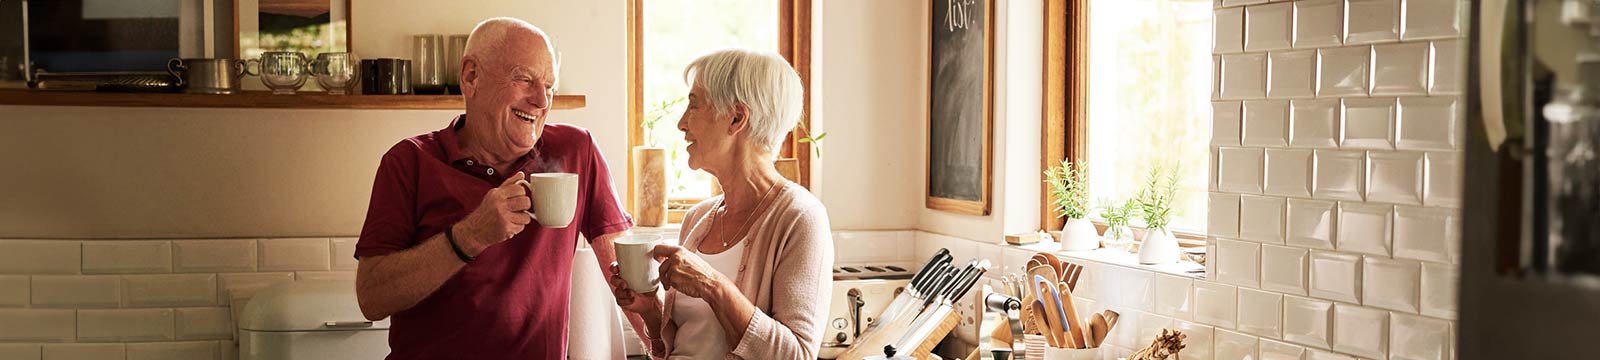 Retired couple enjoying coffee in their kitchen.